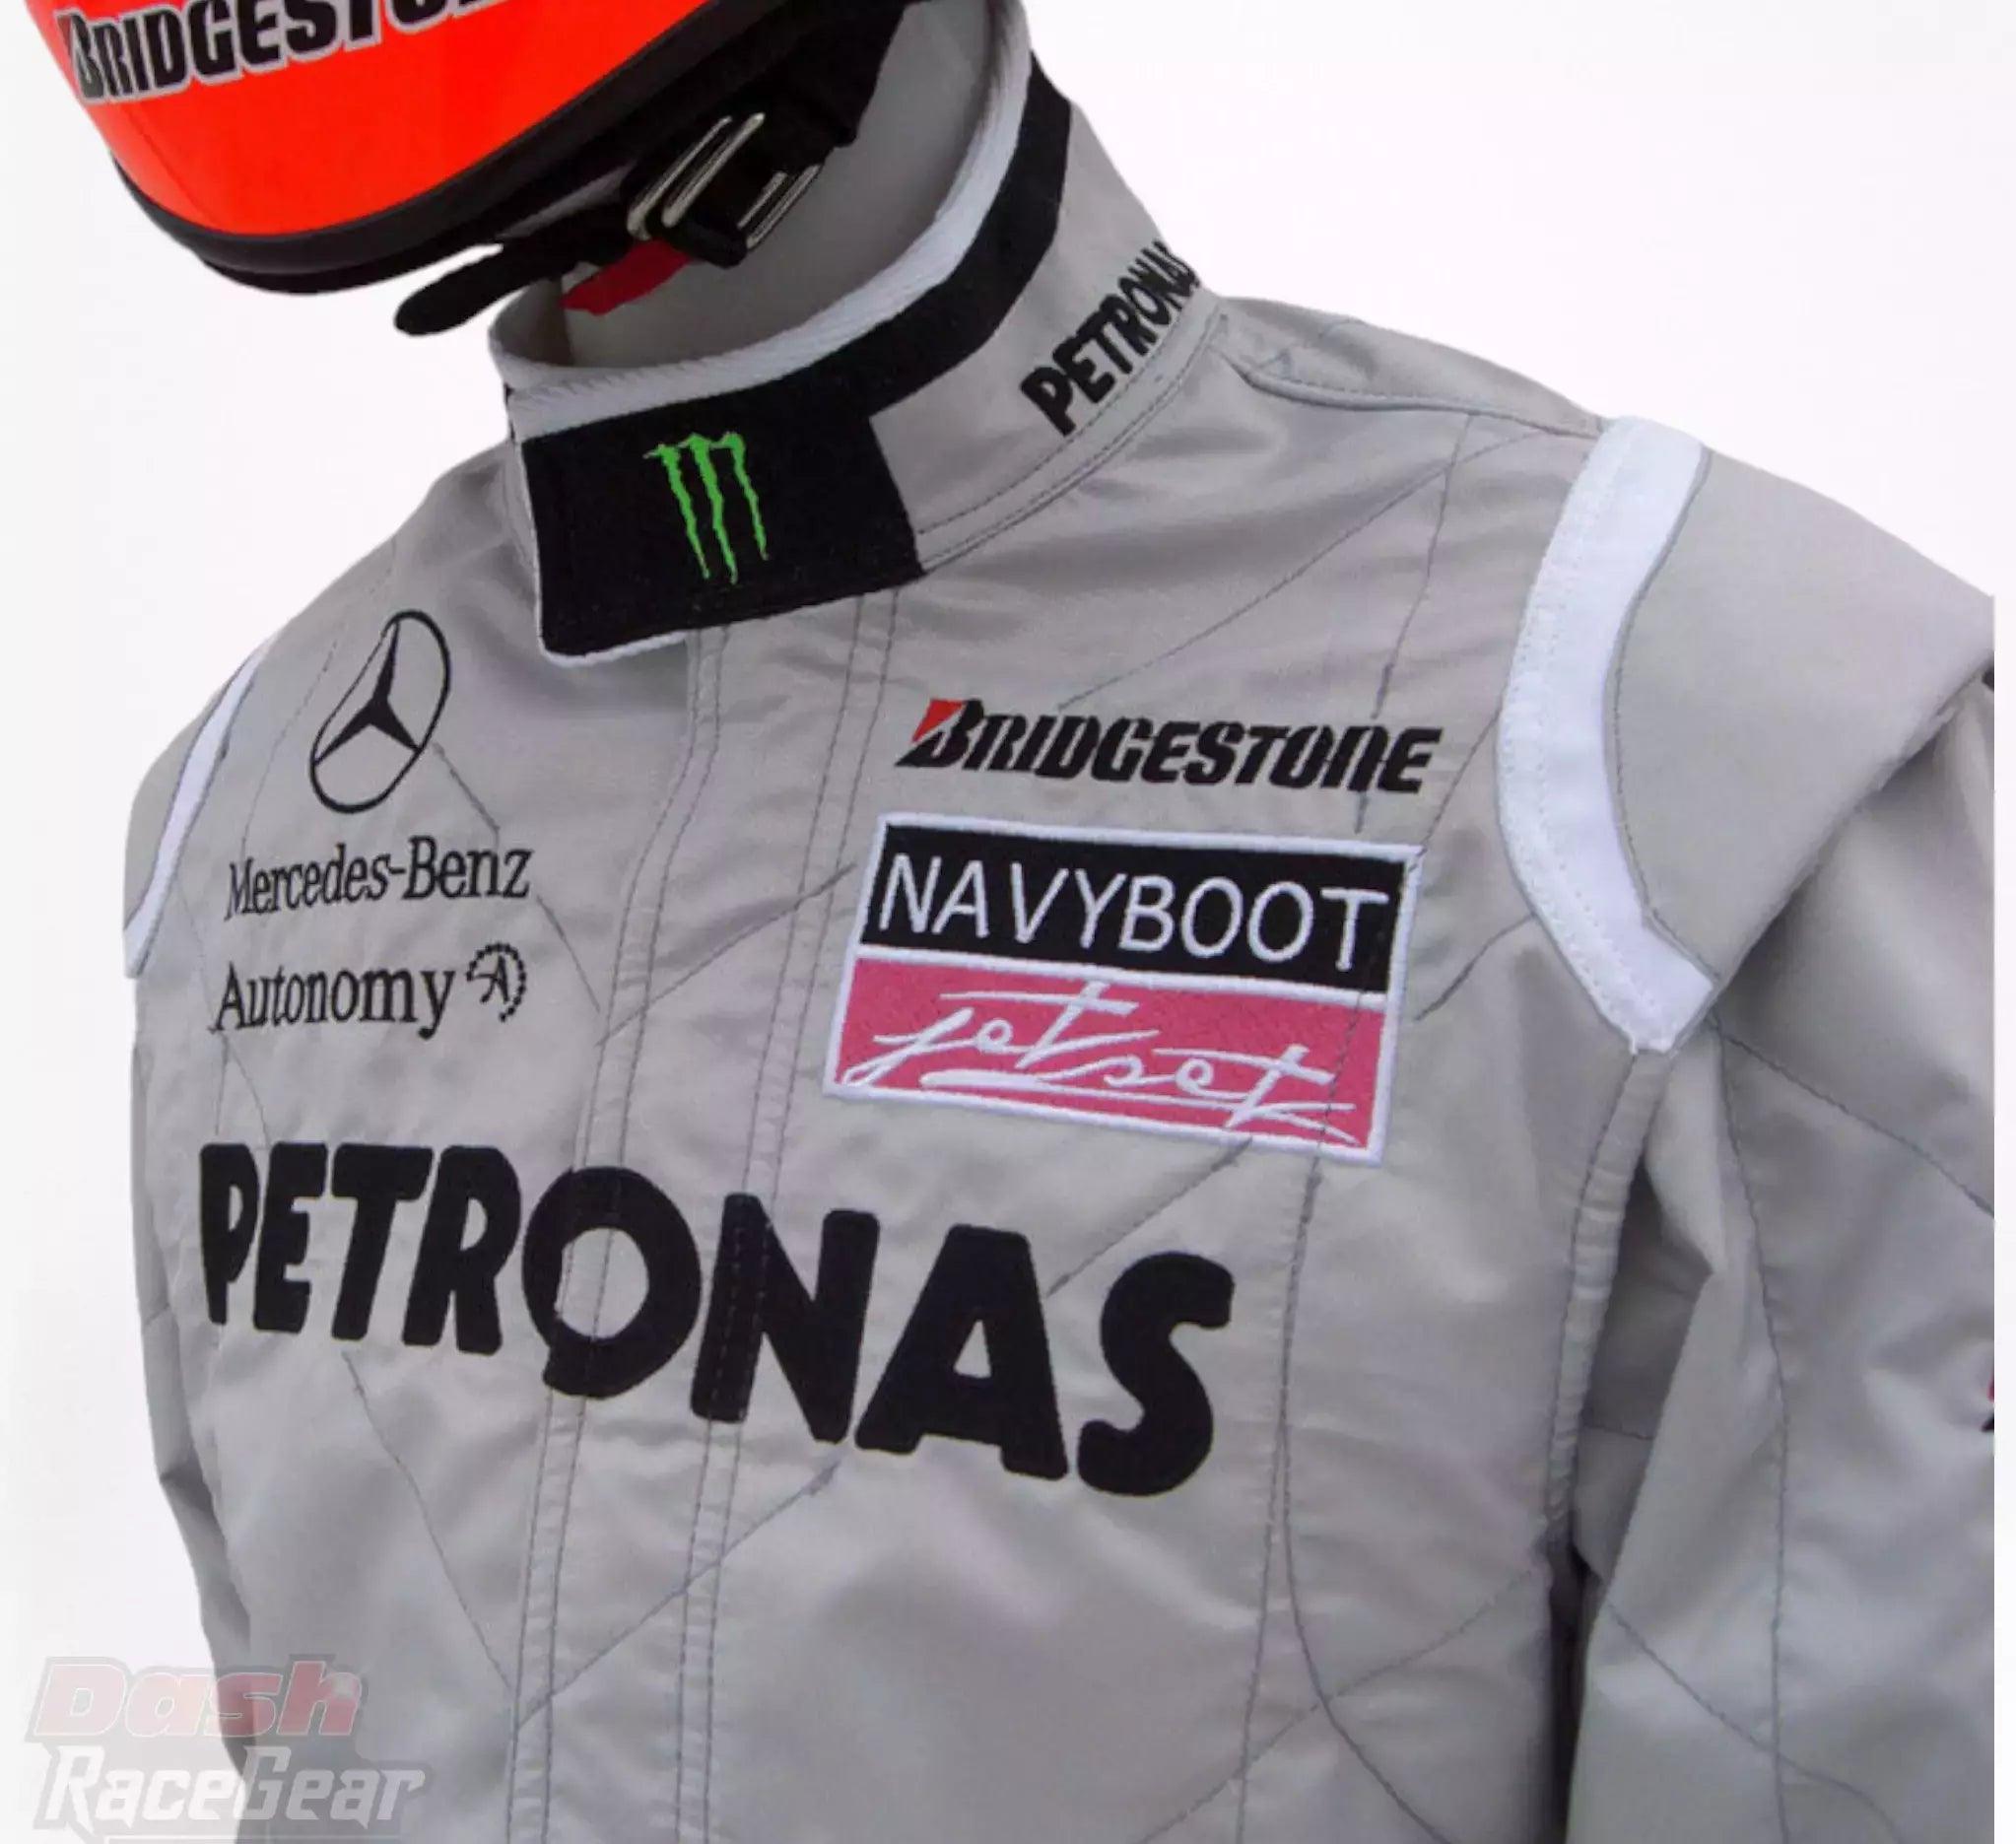 2010 Michael Schumacher Mercedes Benz F1 Embroiderd Racing Suit - Dash Racegear 